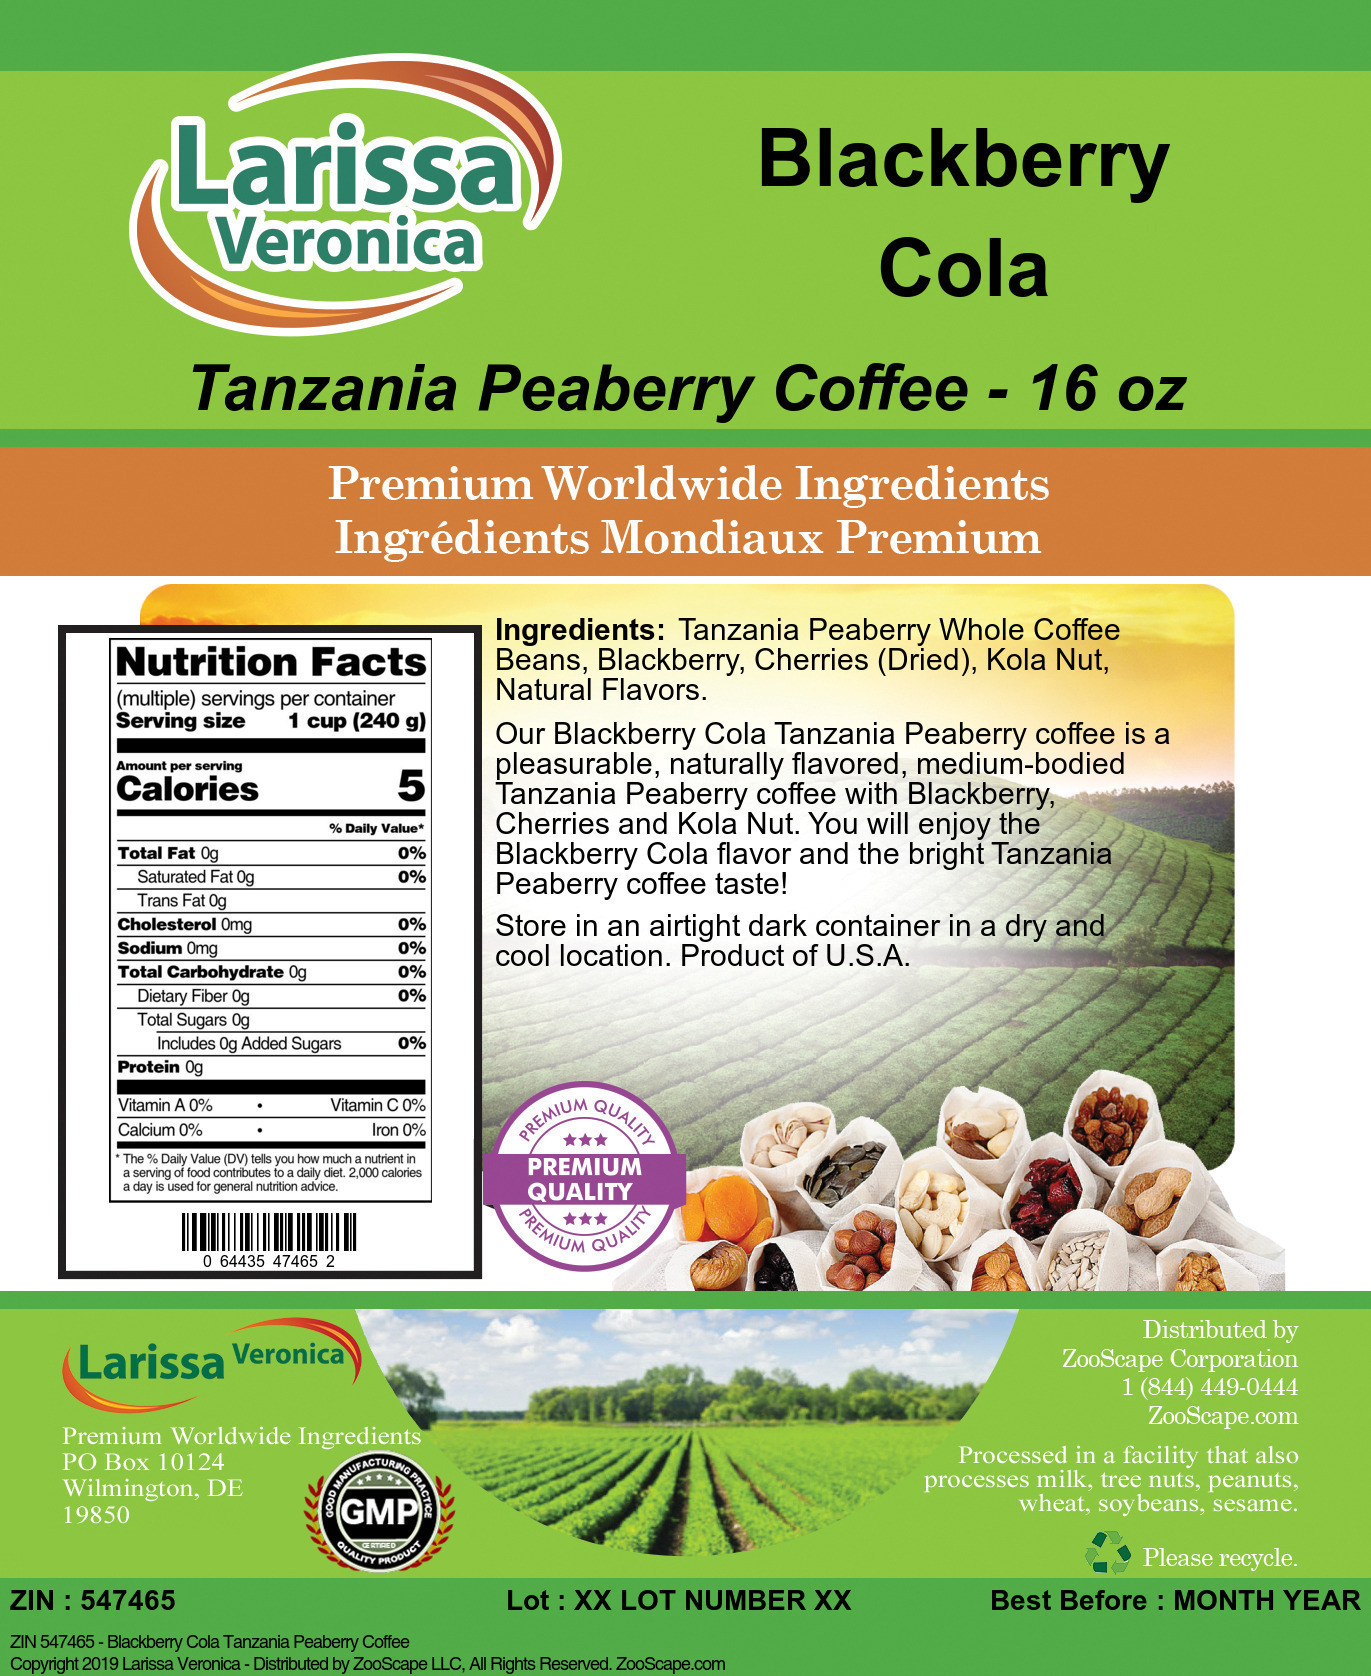 Blackberry Cola Tanzania Peaberry Coffee - Label